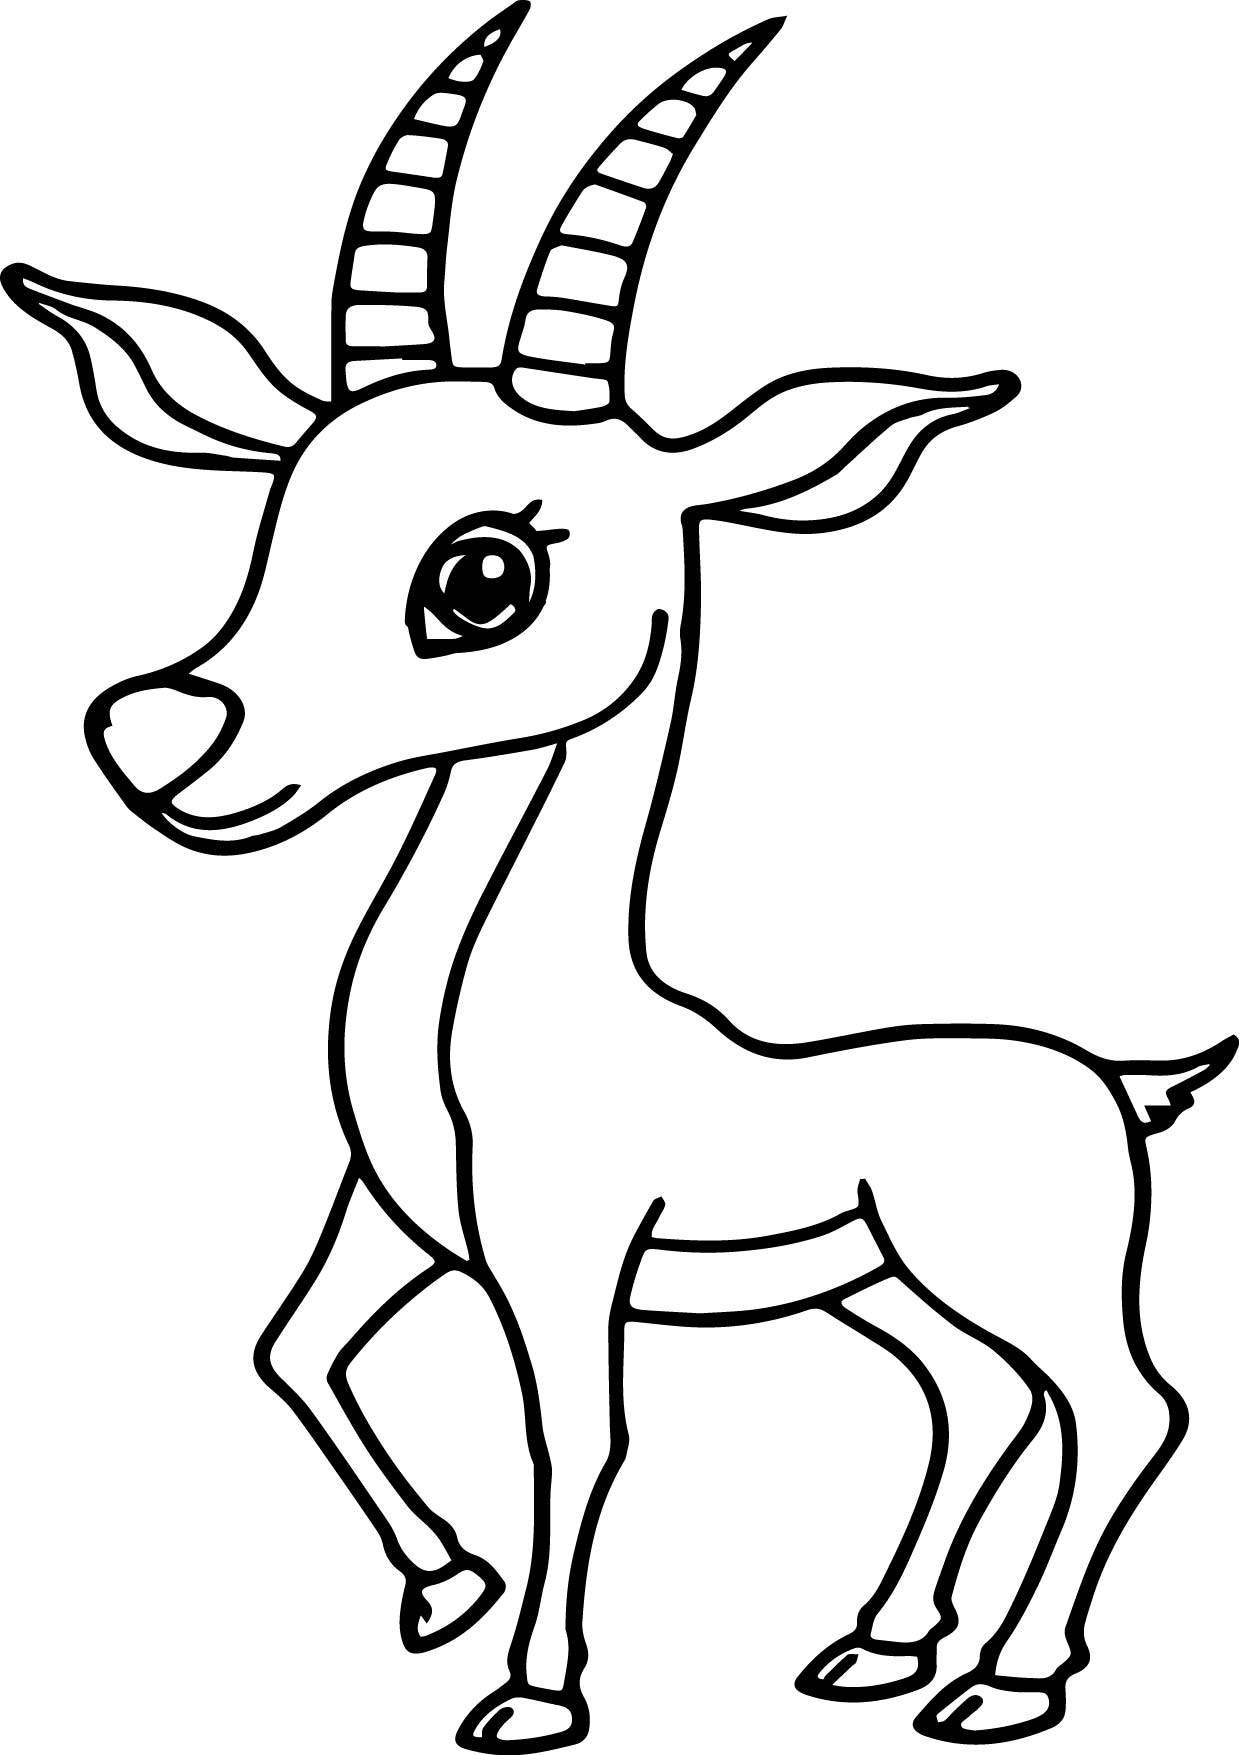 Antelope Coloring Page at GetColorings.com | Free printable colorings